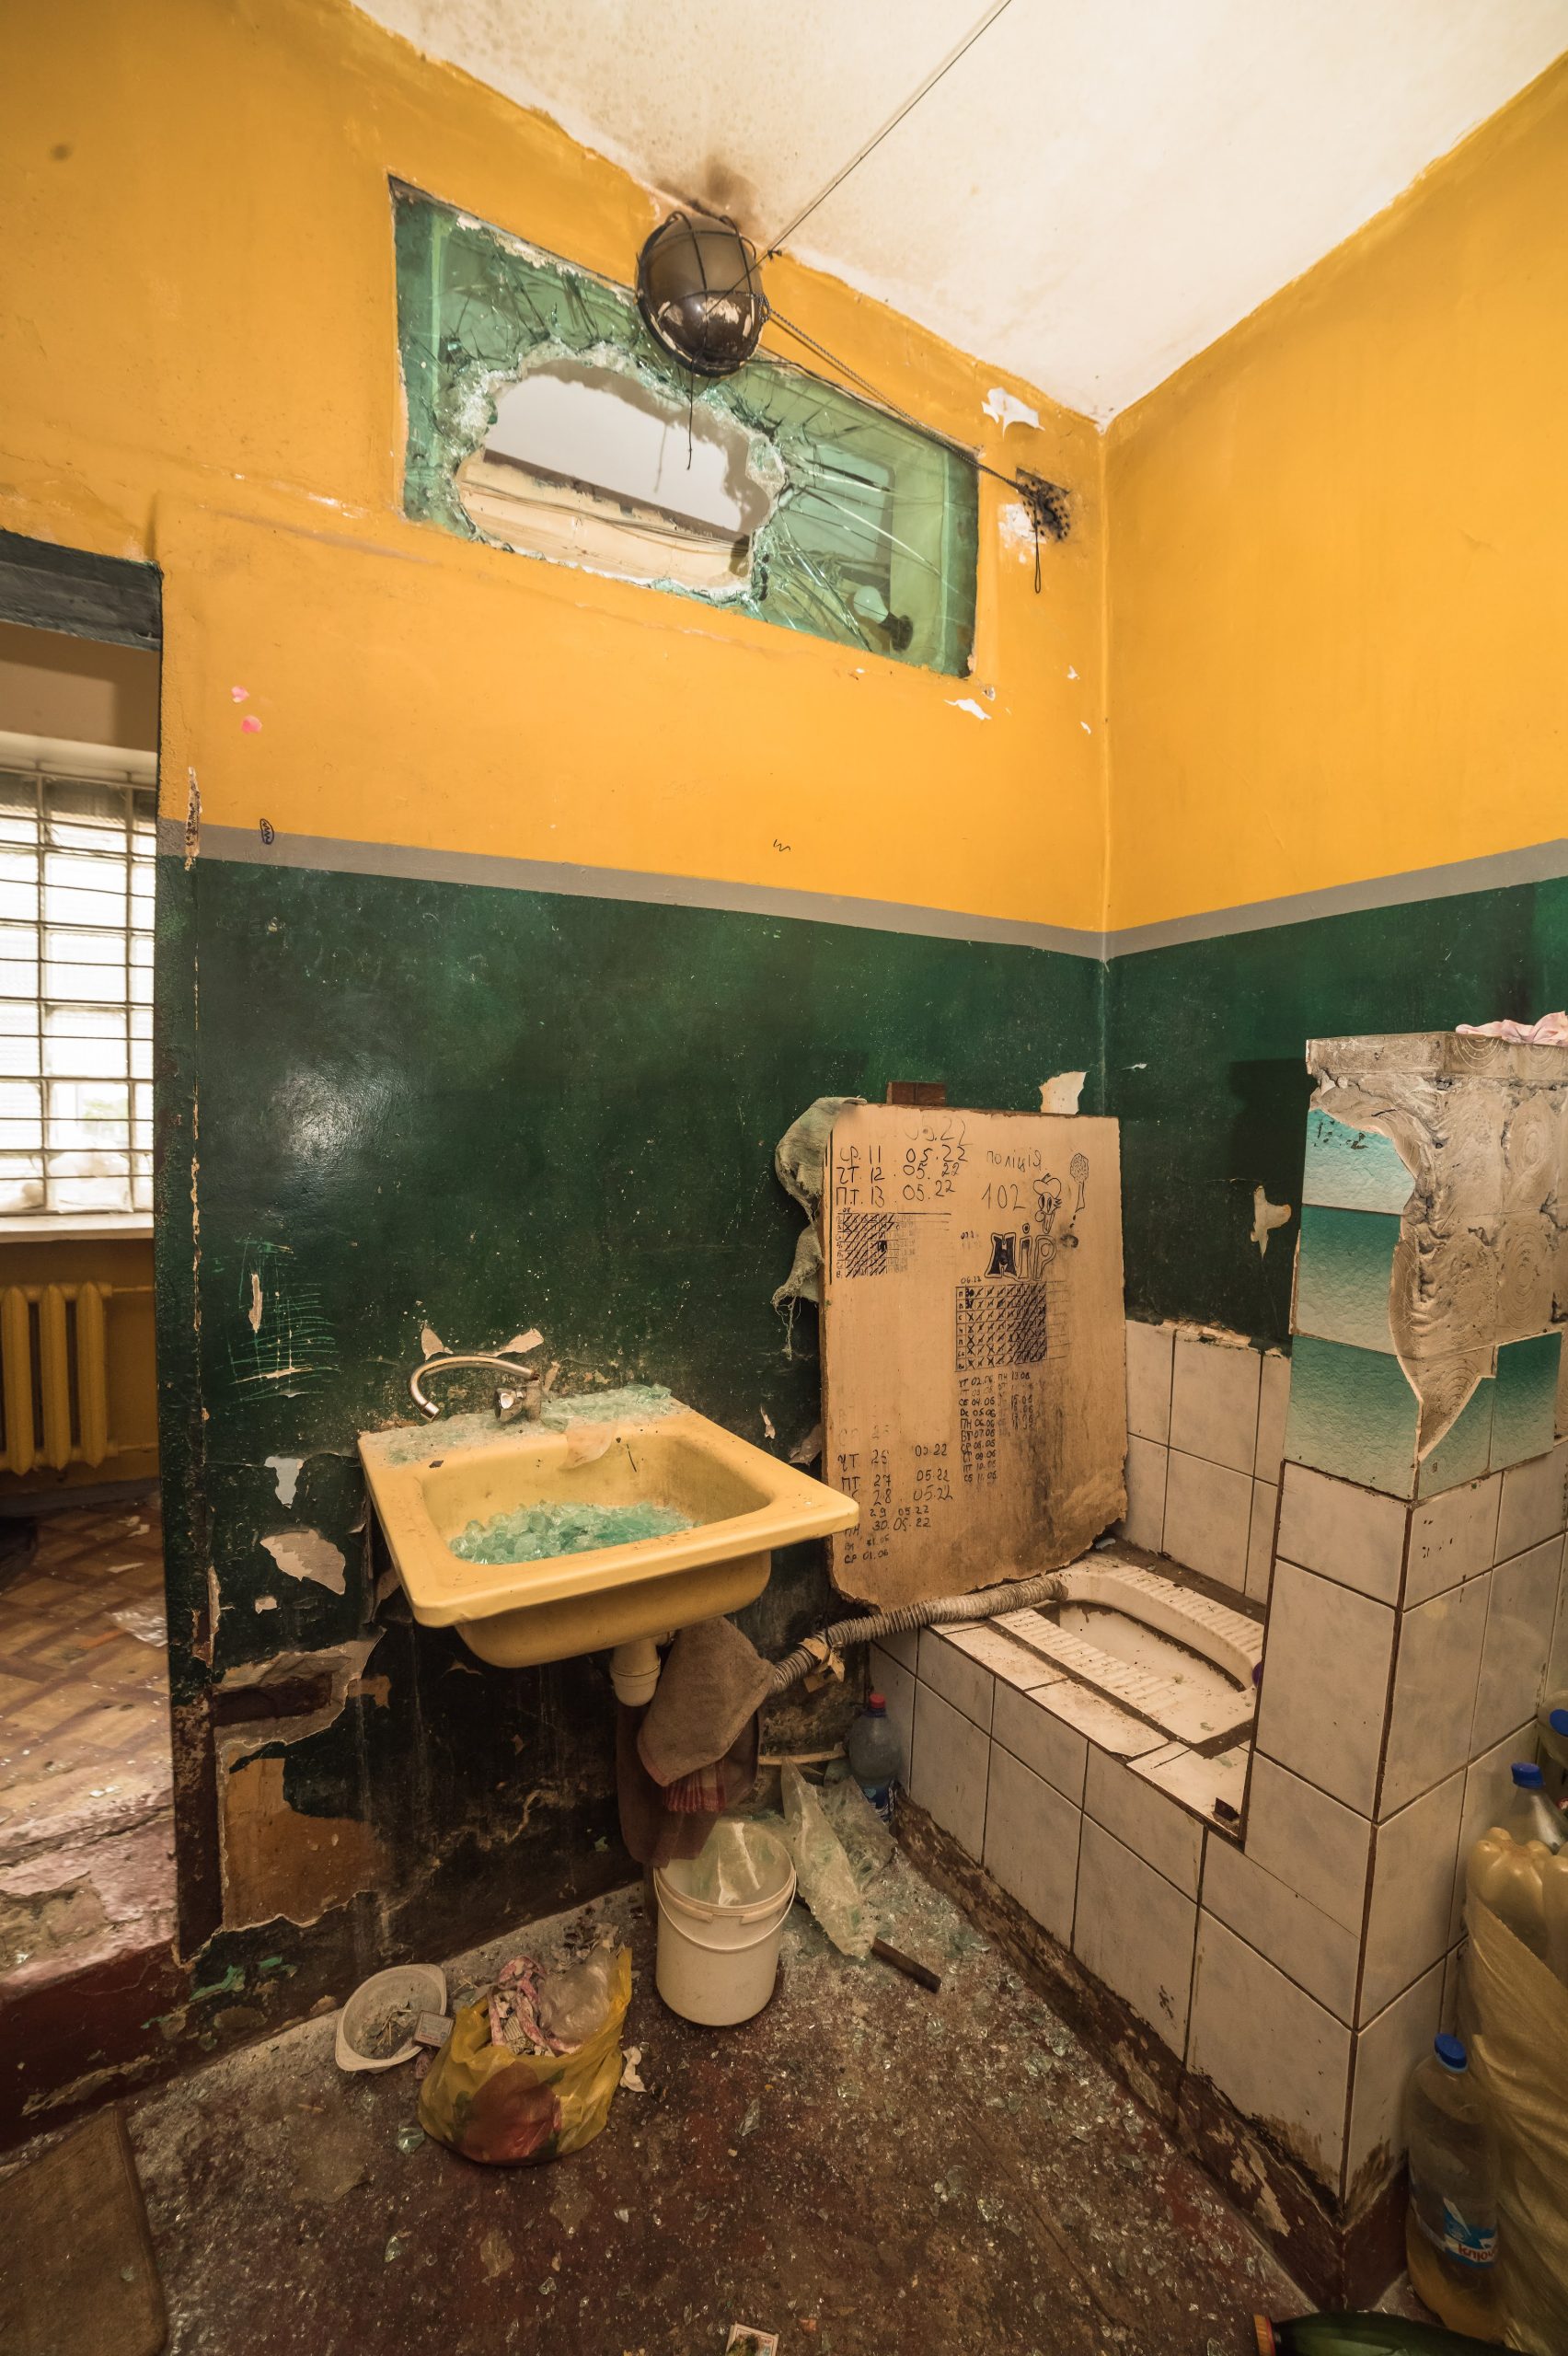 Balakliya, Kharkiv region. A torture chamber organized by Russian Army in the a police precinct. Photo was taken on Sep 20, 2022 by Yevhen Tytarenko.